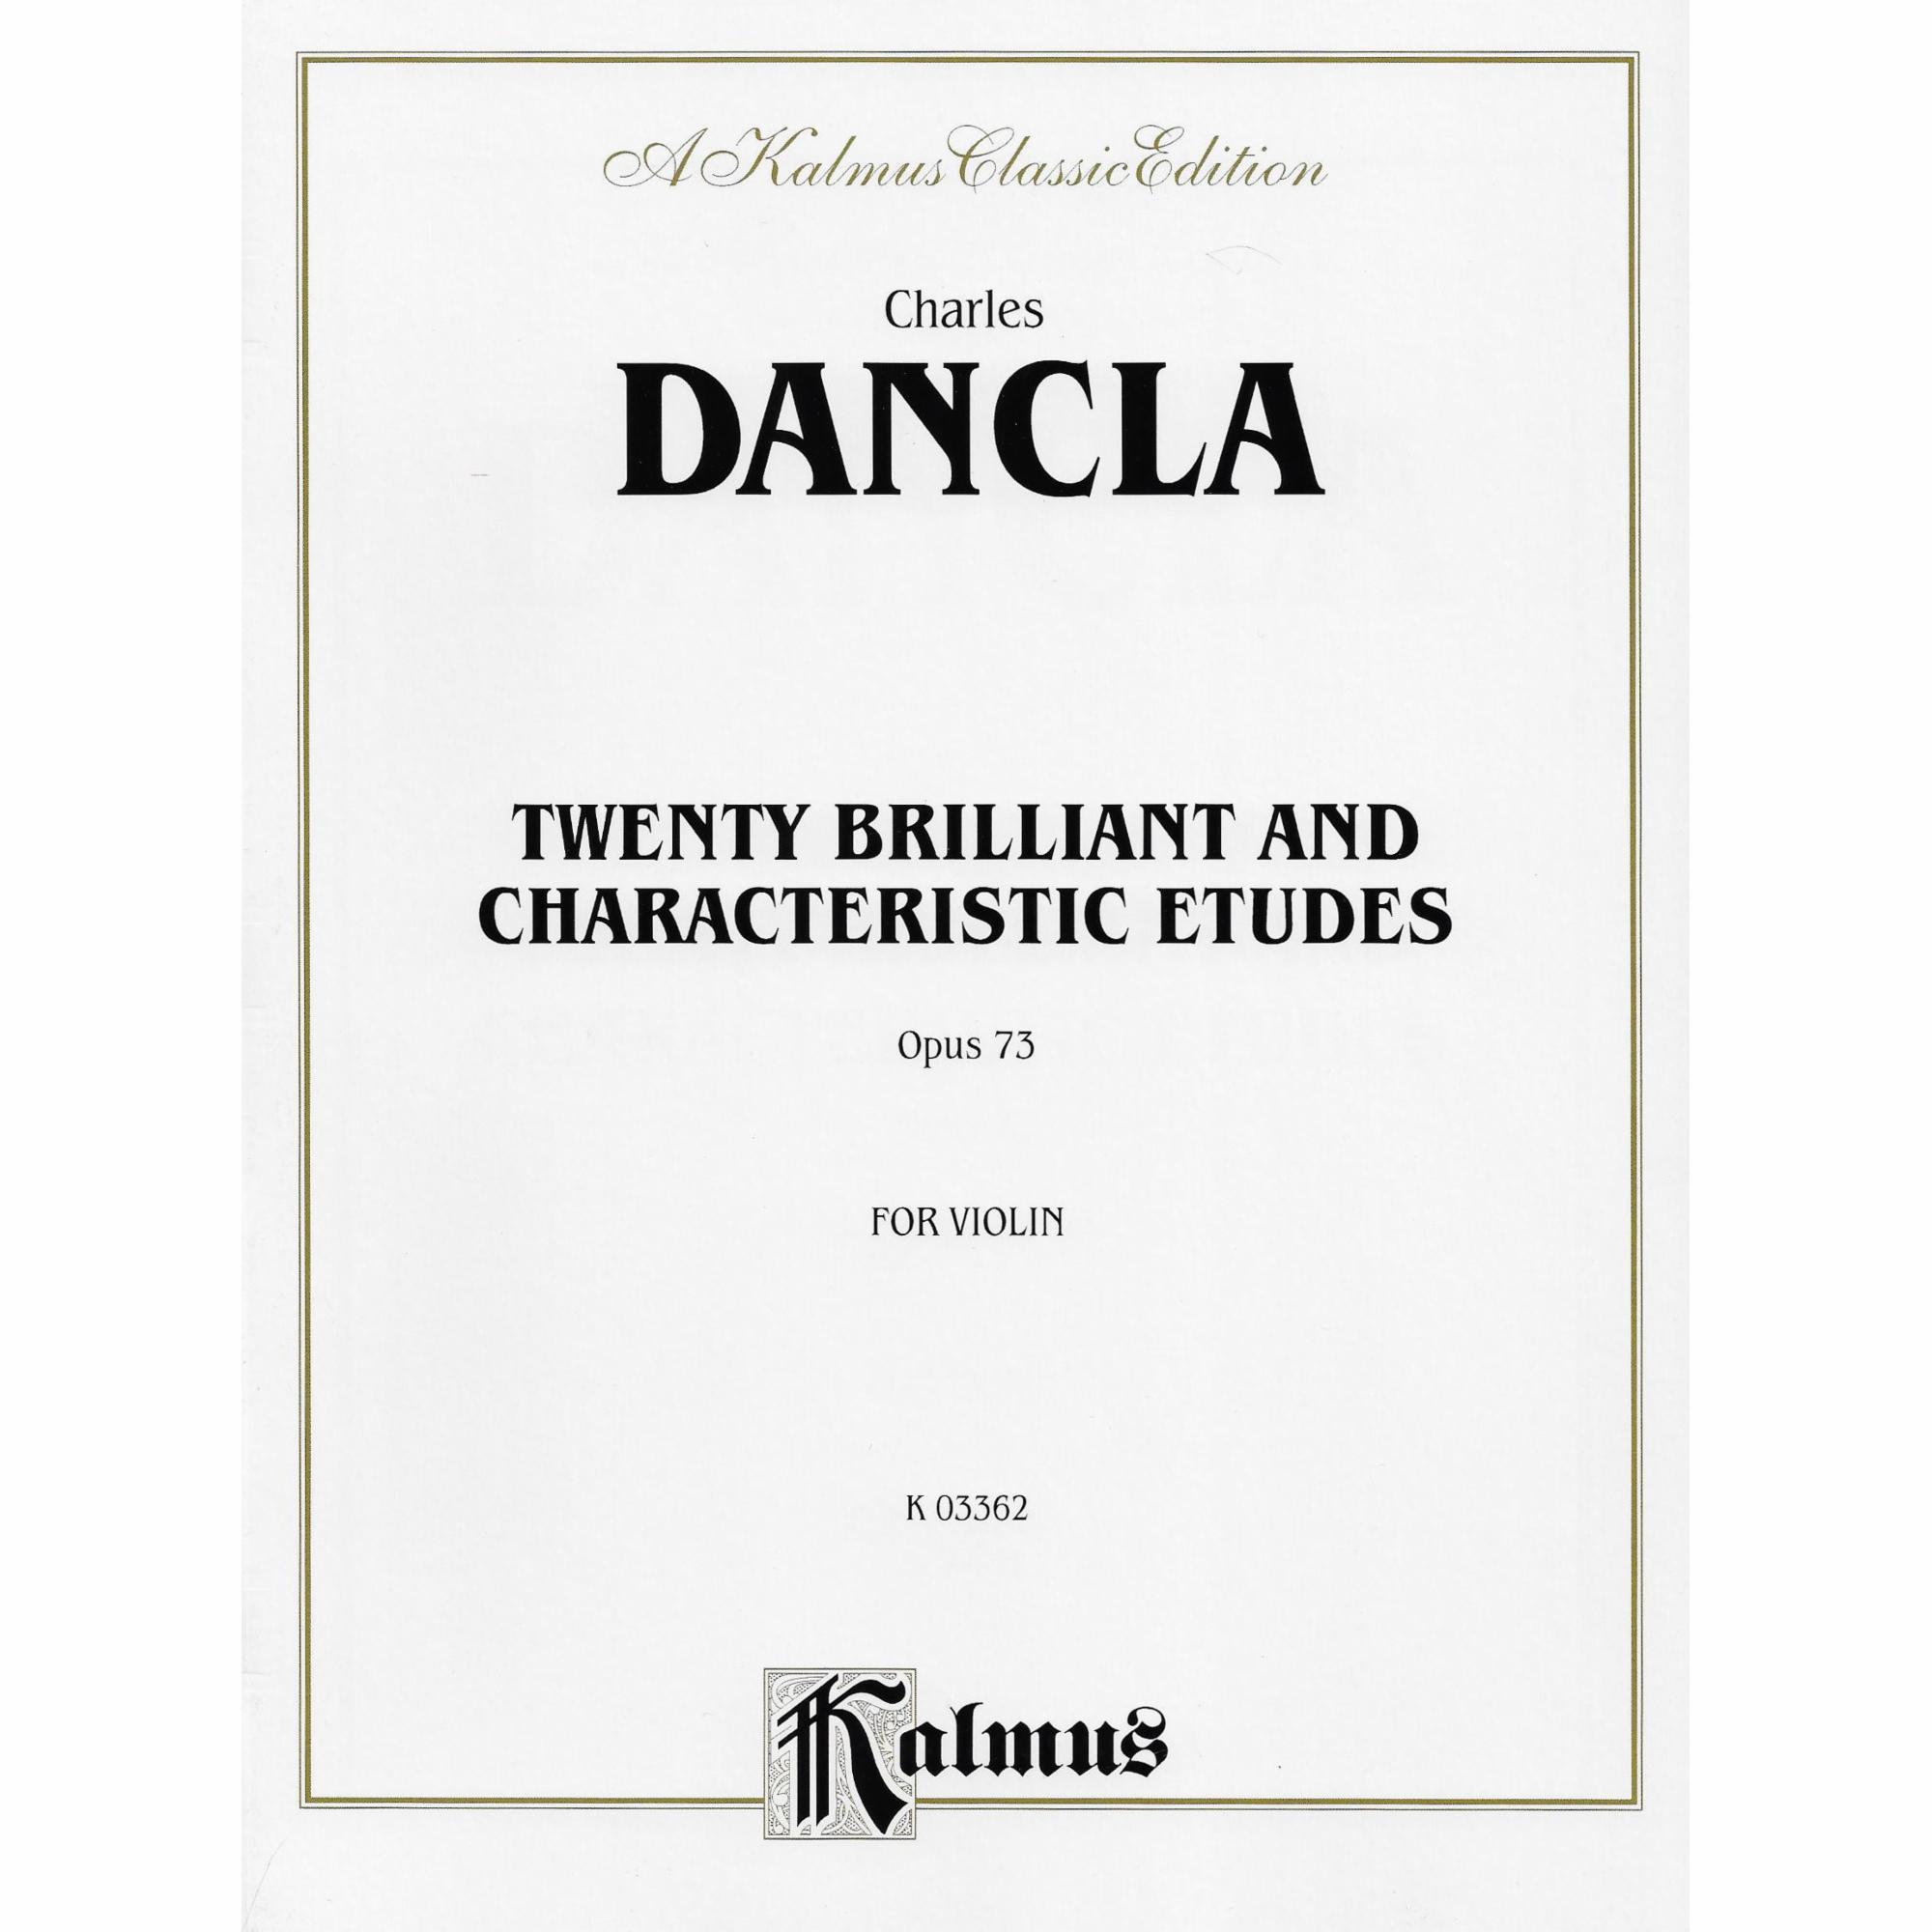 Dancla -- Twenty Brilliant and Characteristic Etudes, Op. 73 for Violin